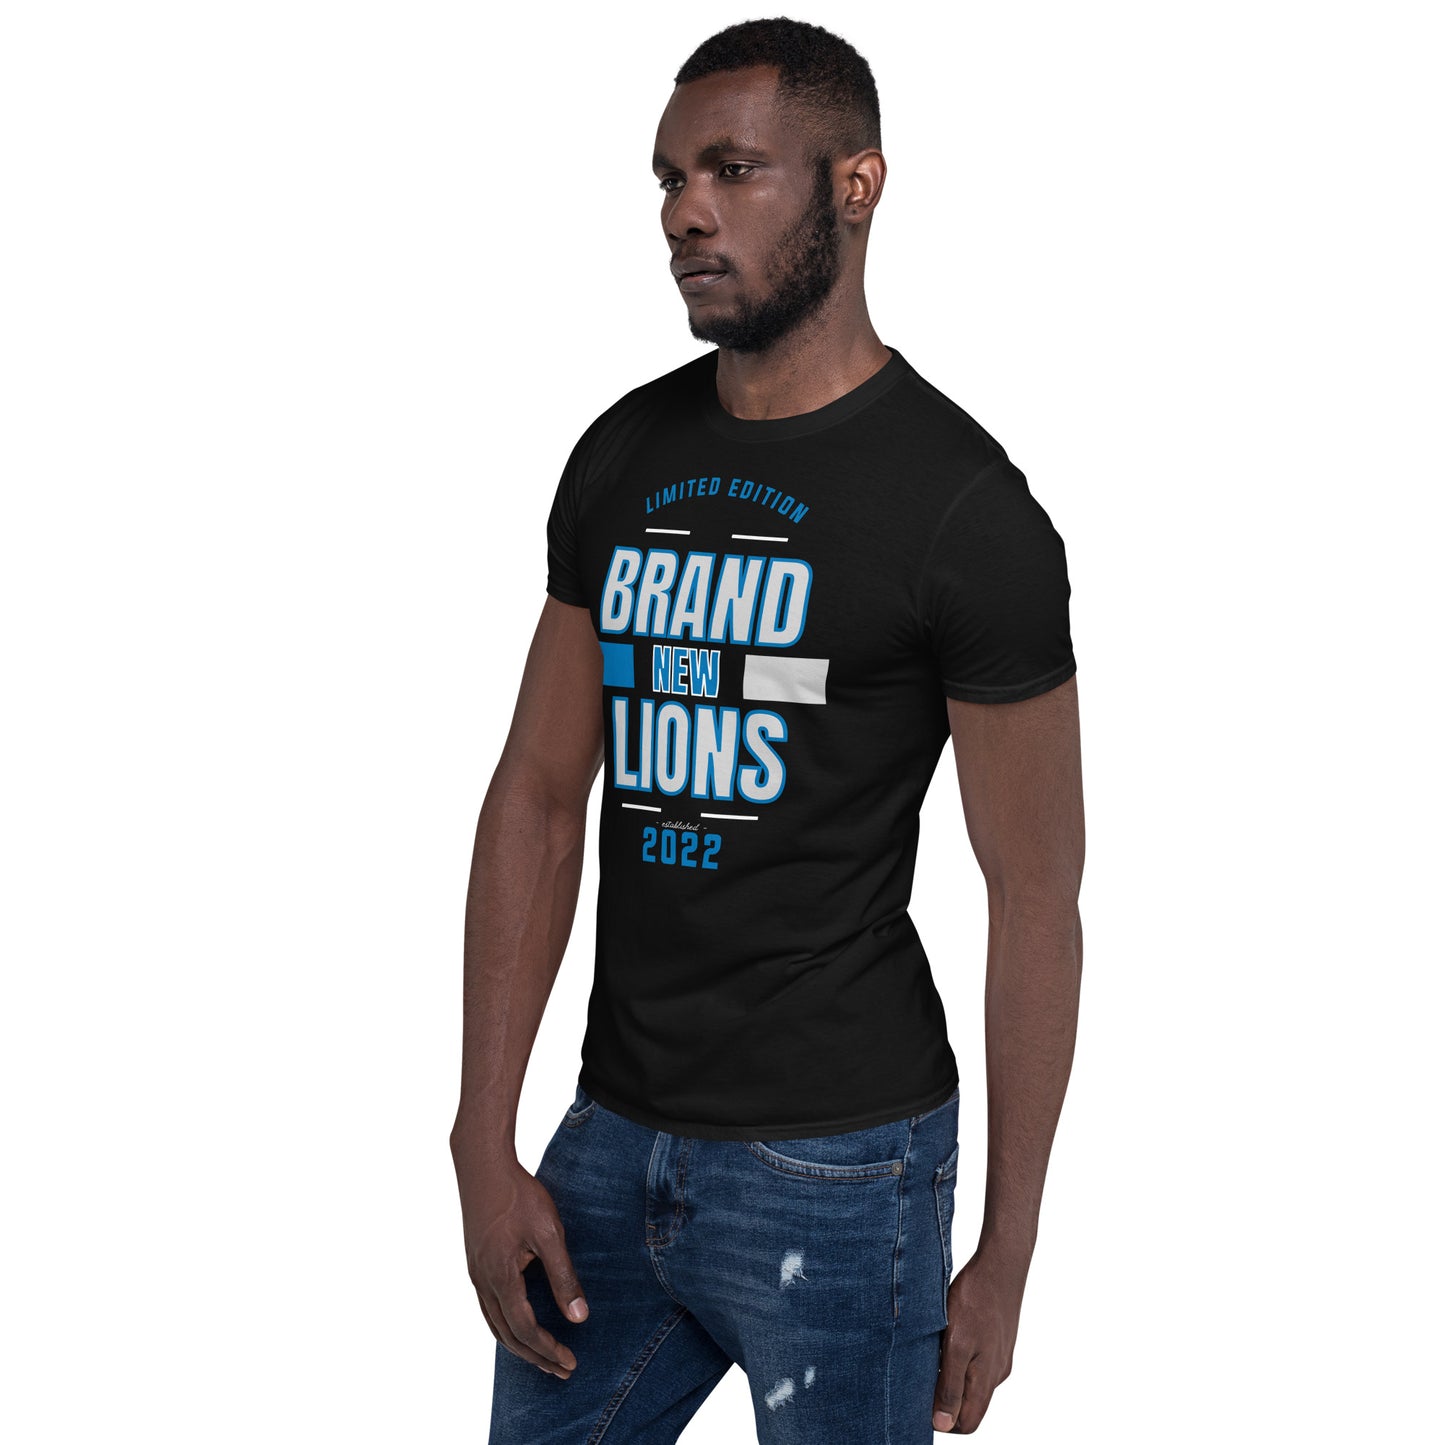 Not the SOL - BRAND NEW LIONS Est. 2022 Short-Sleeve Unisex T-Shirt BLK or WHT